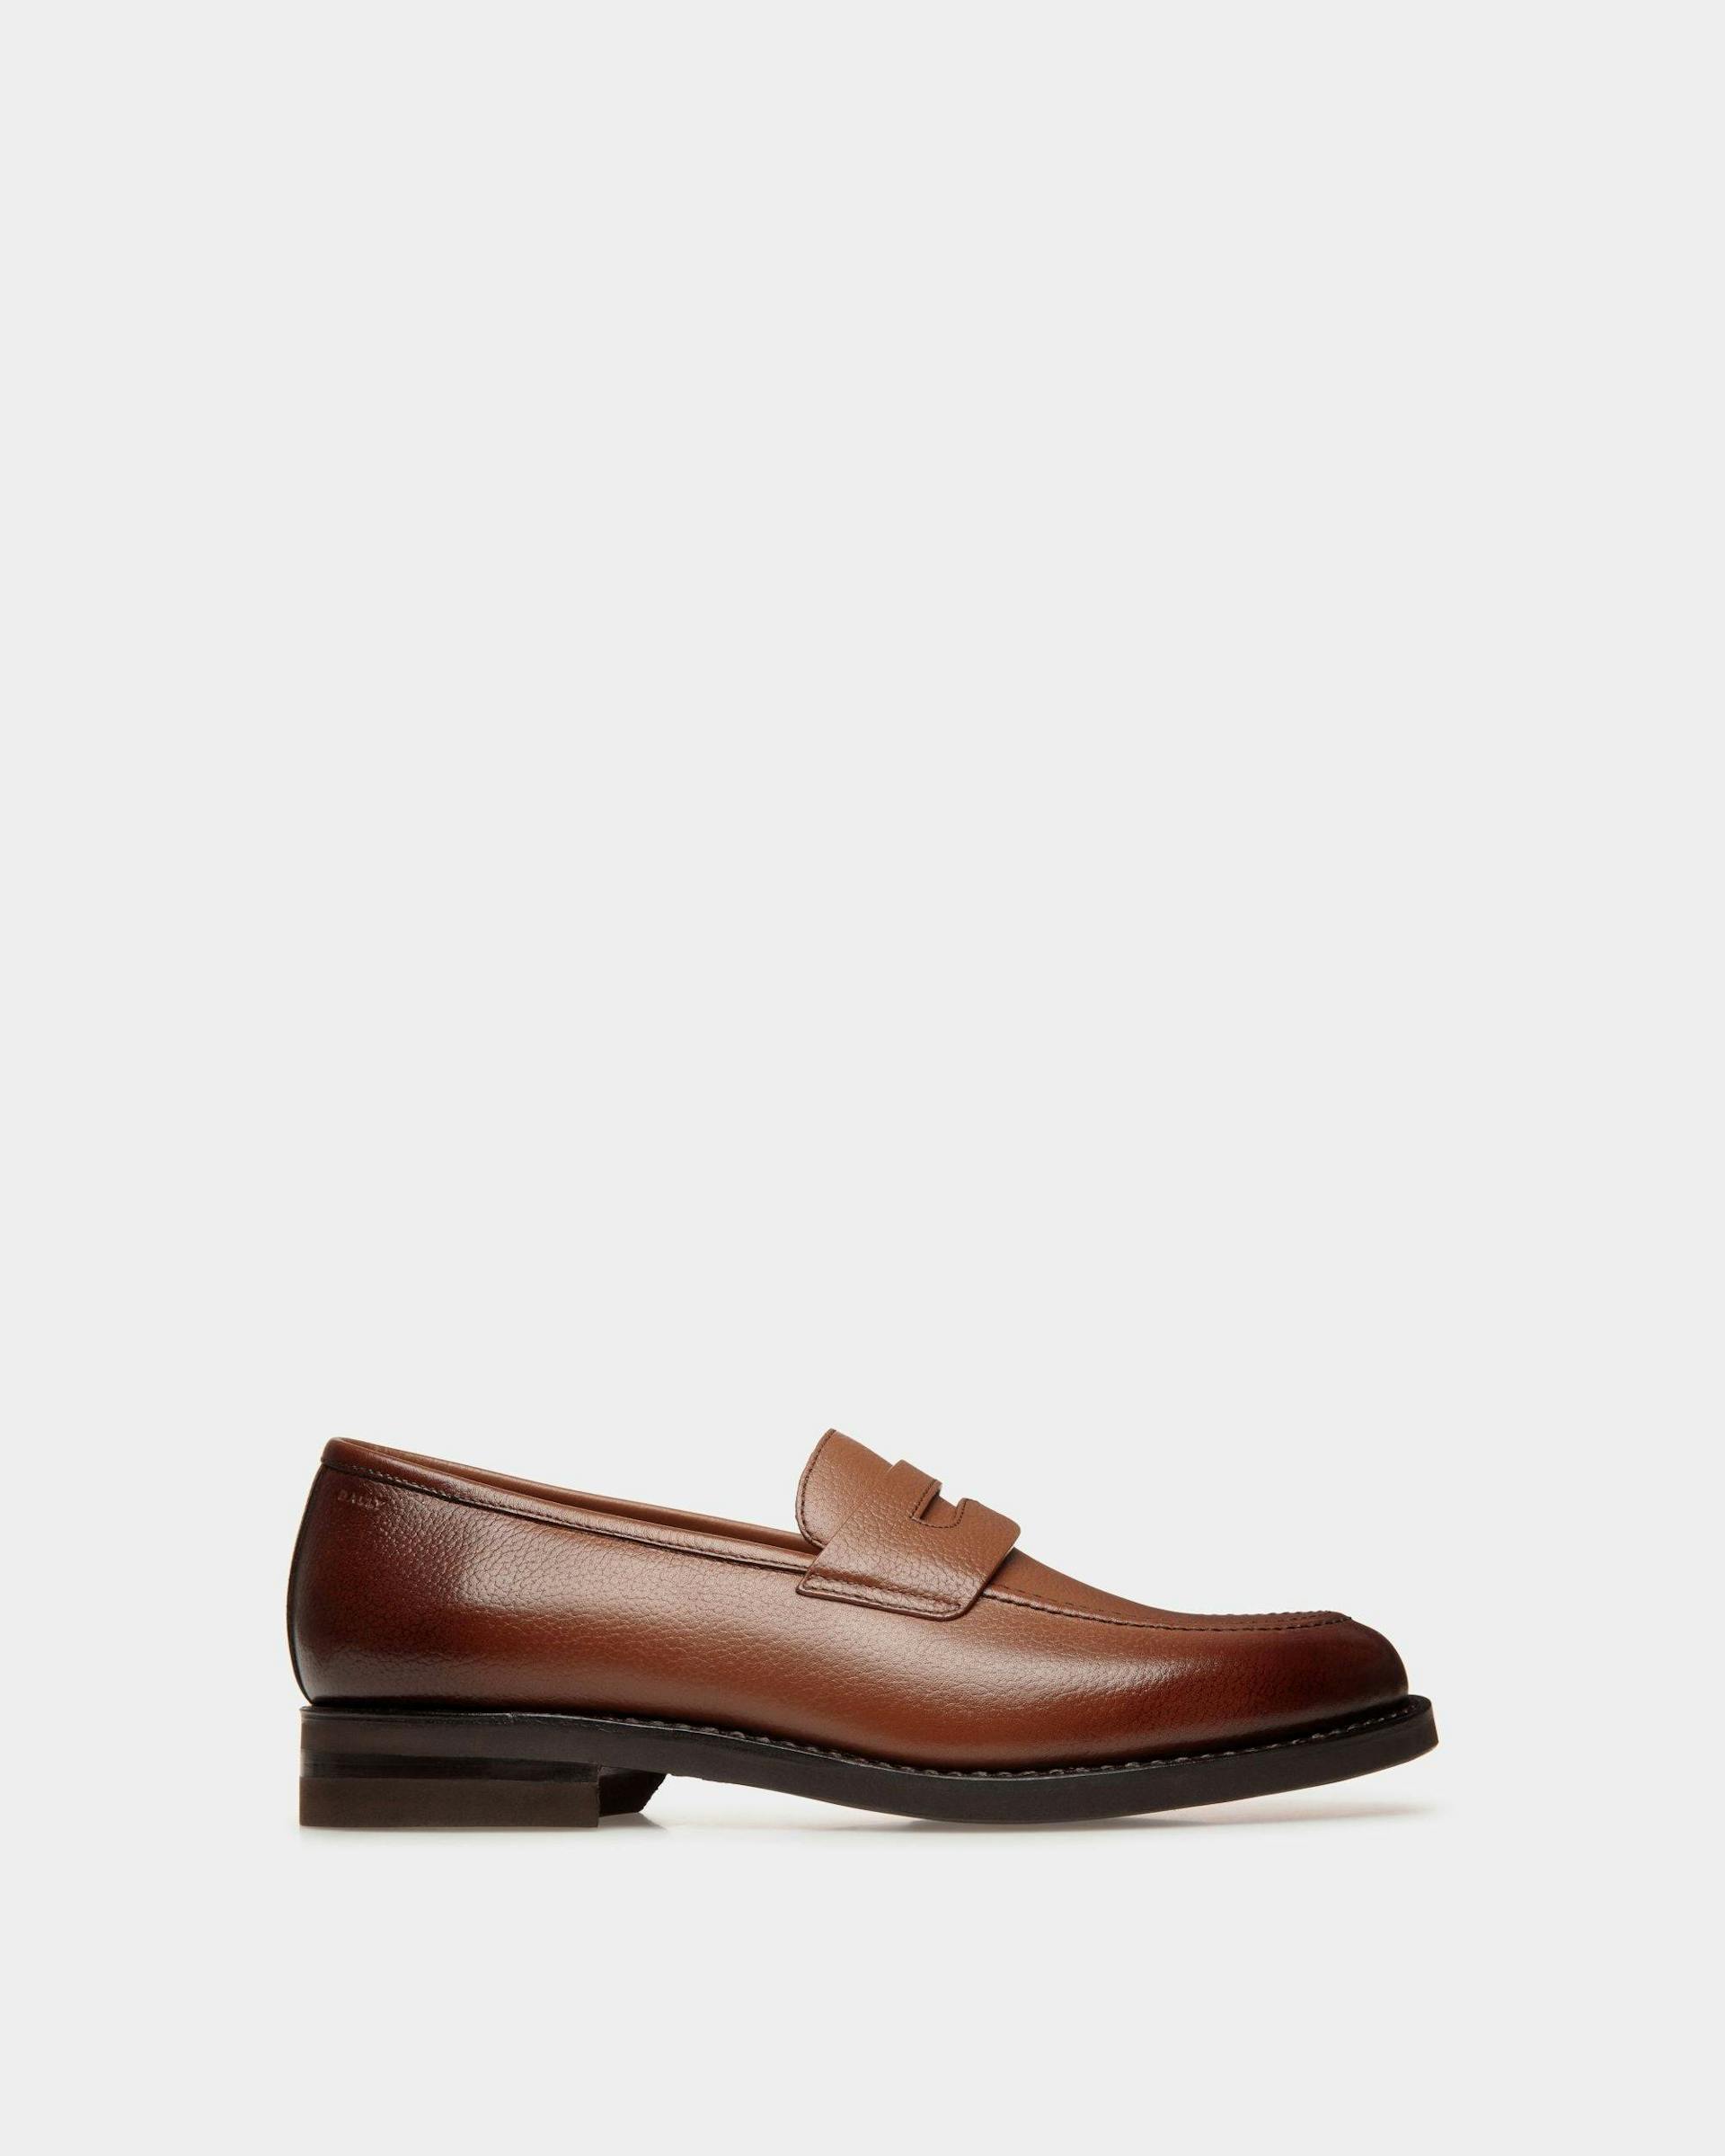 Men's Schoenen Loafer in Embossed Leather | Bally | Still Life Side